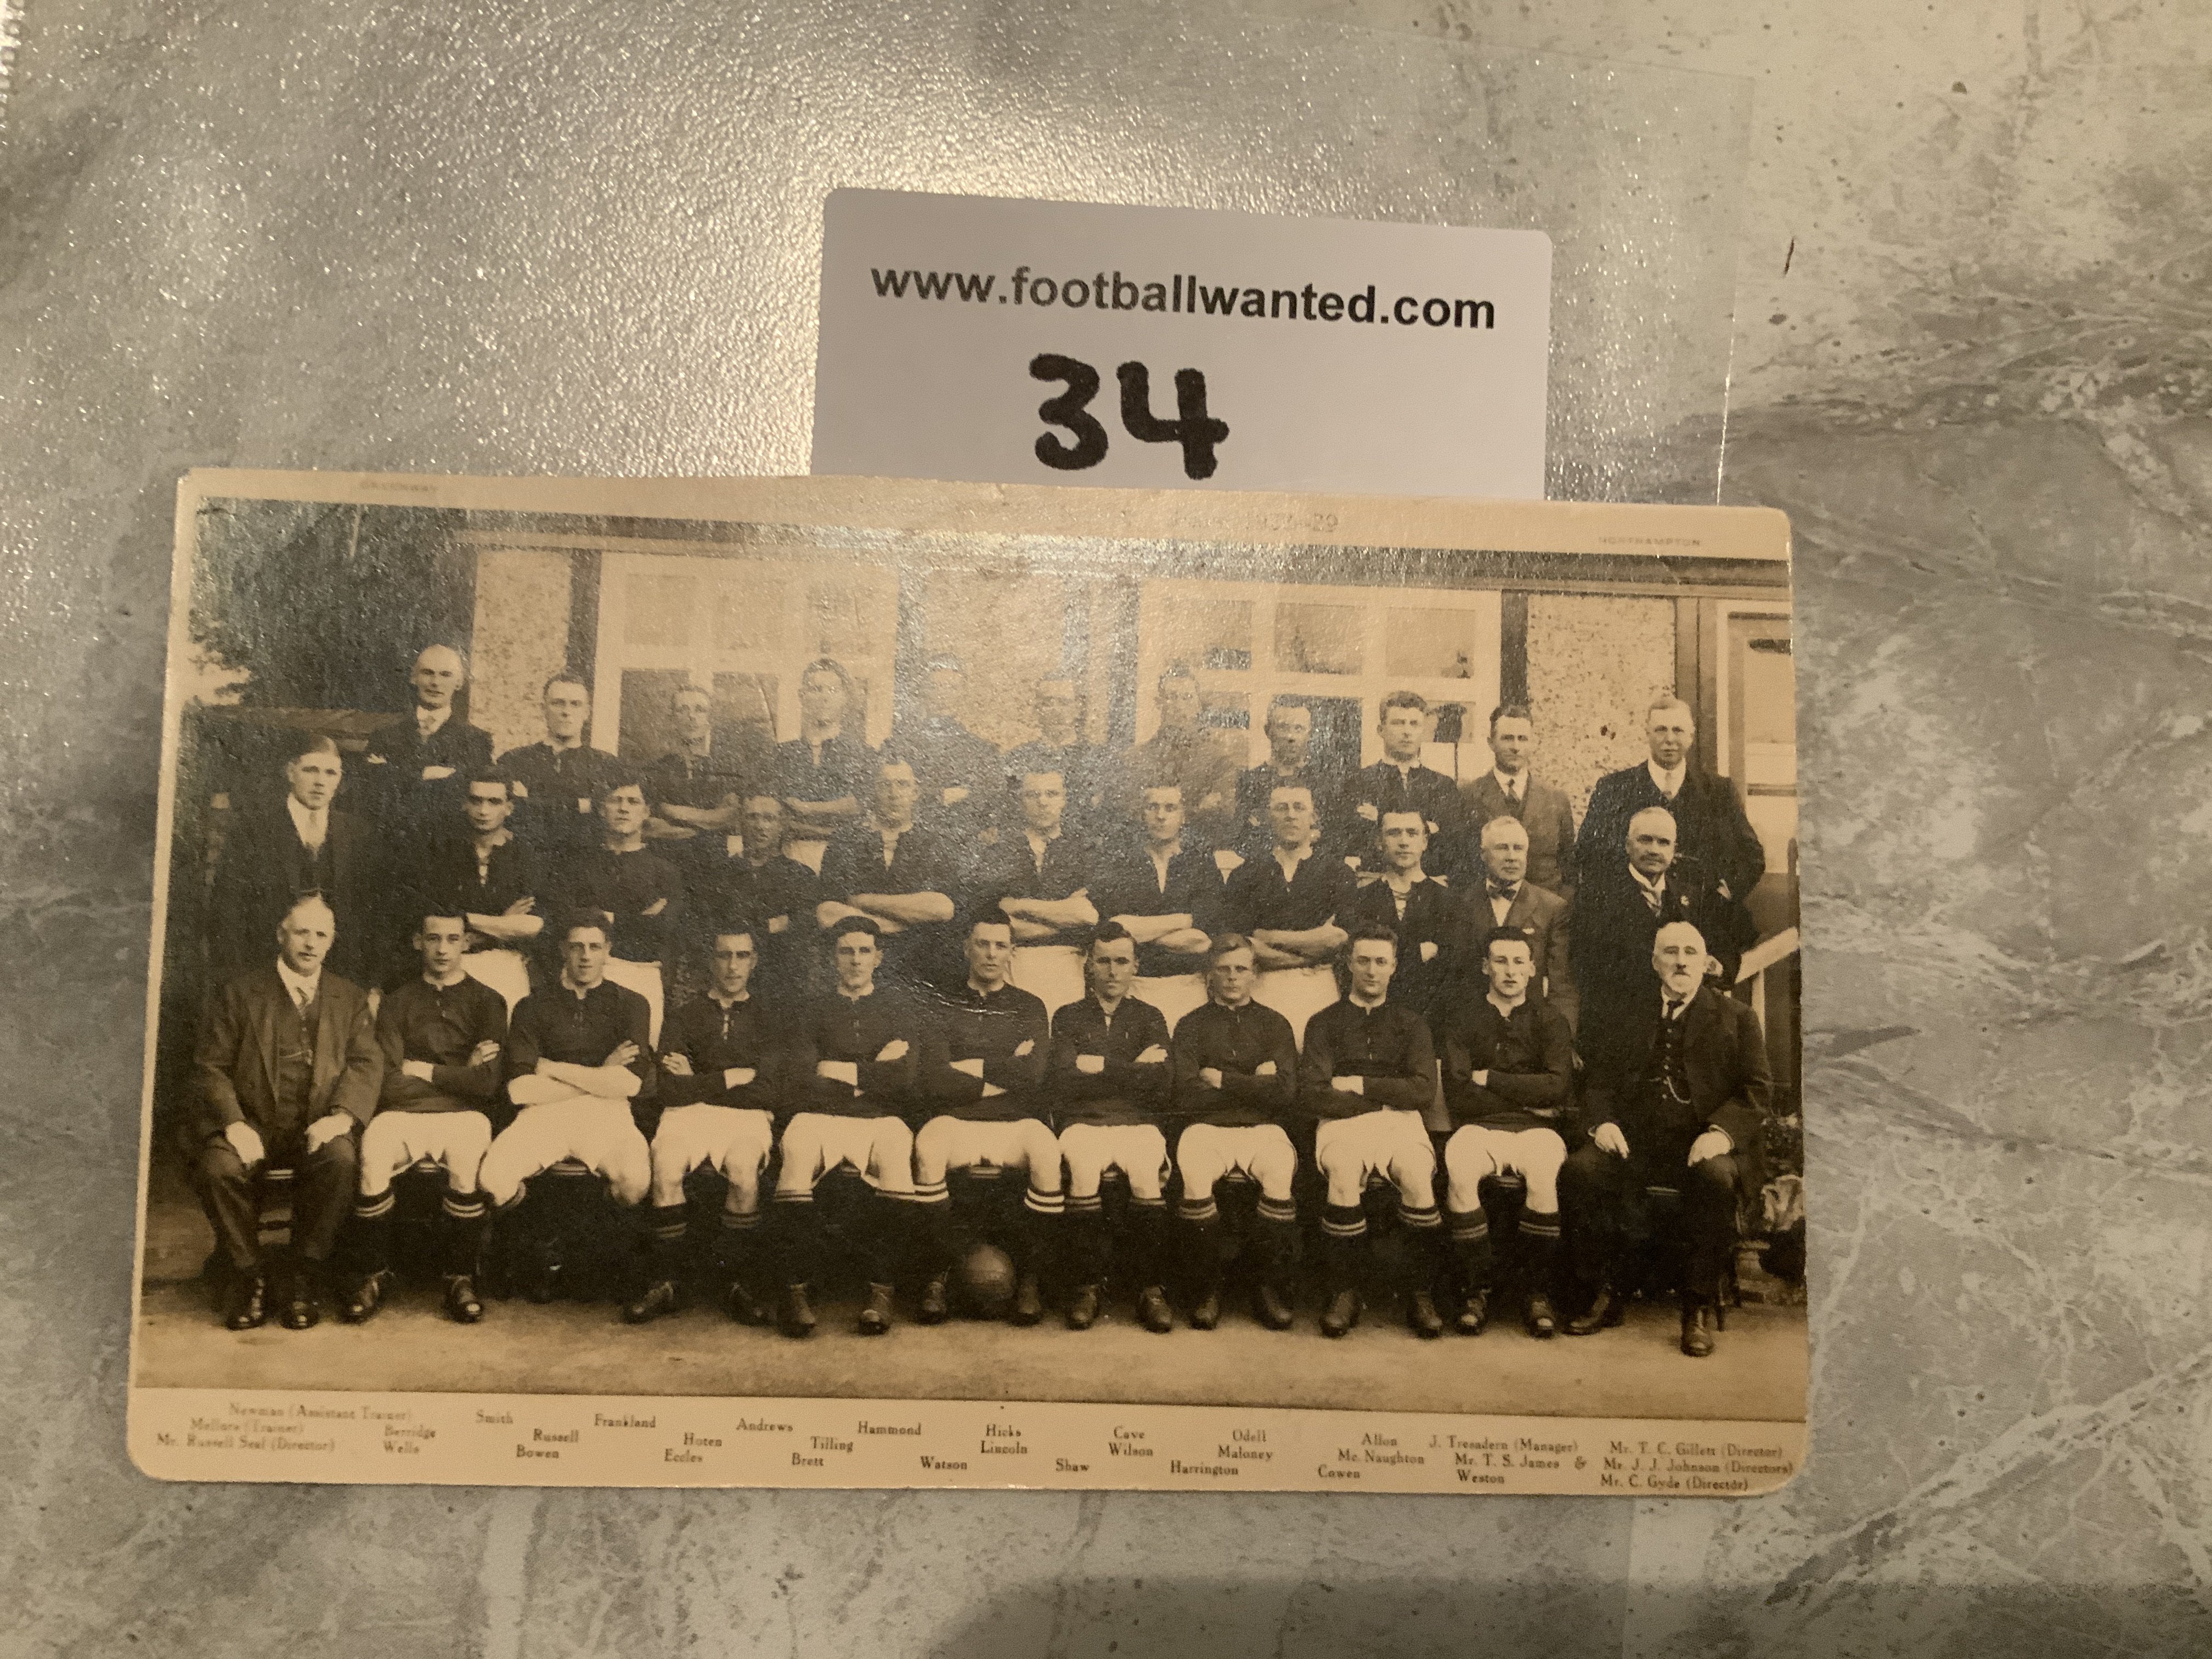 Northampton Town 1928/1929 Football Team Postcard: Fair condition with no writing to rear. Slight